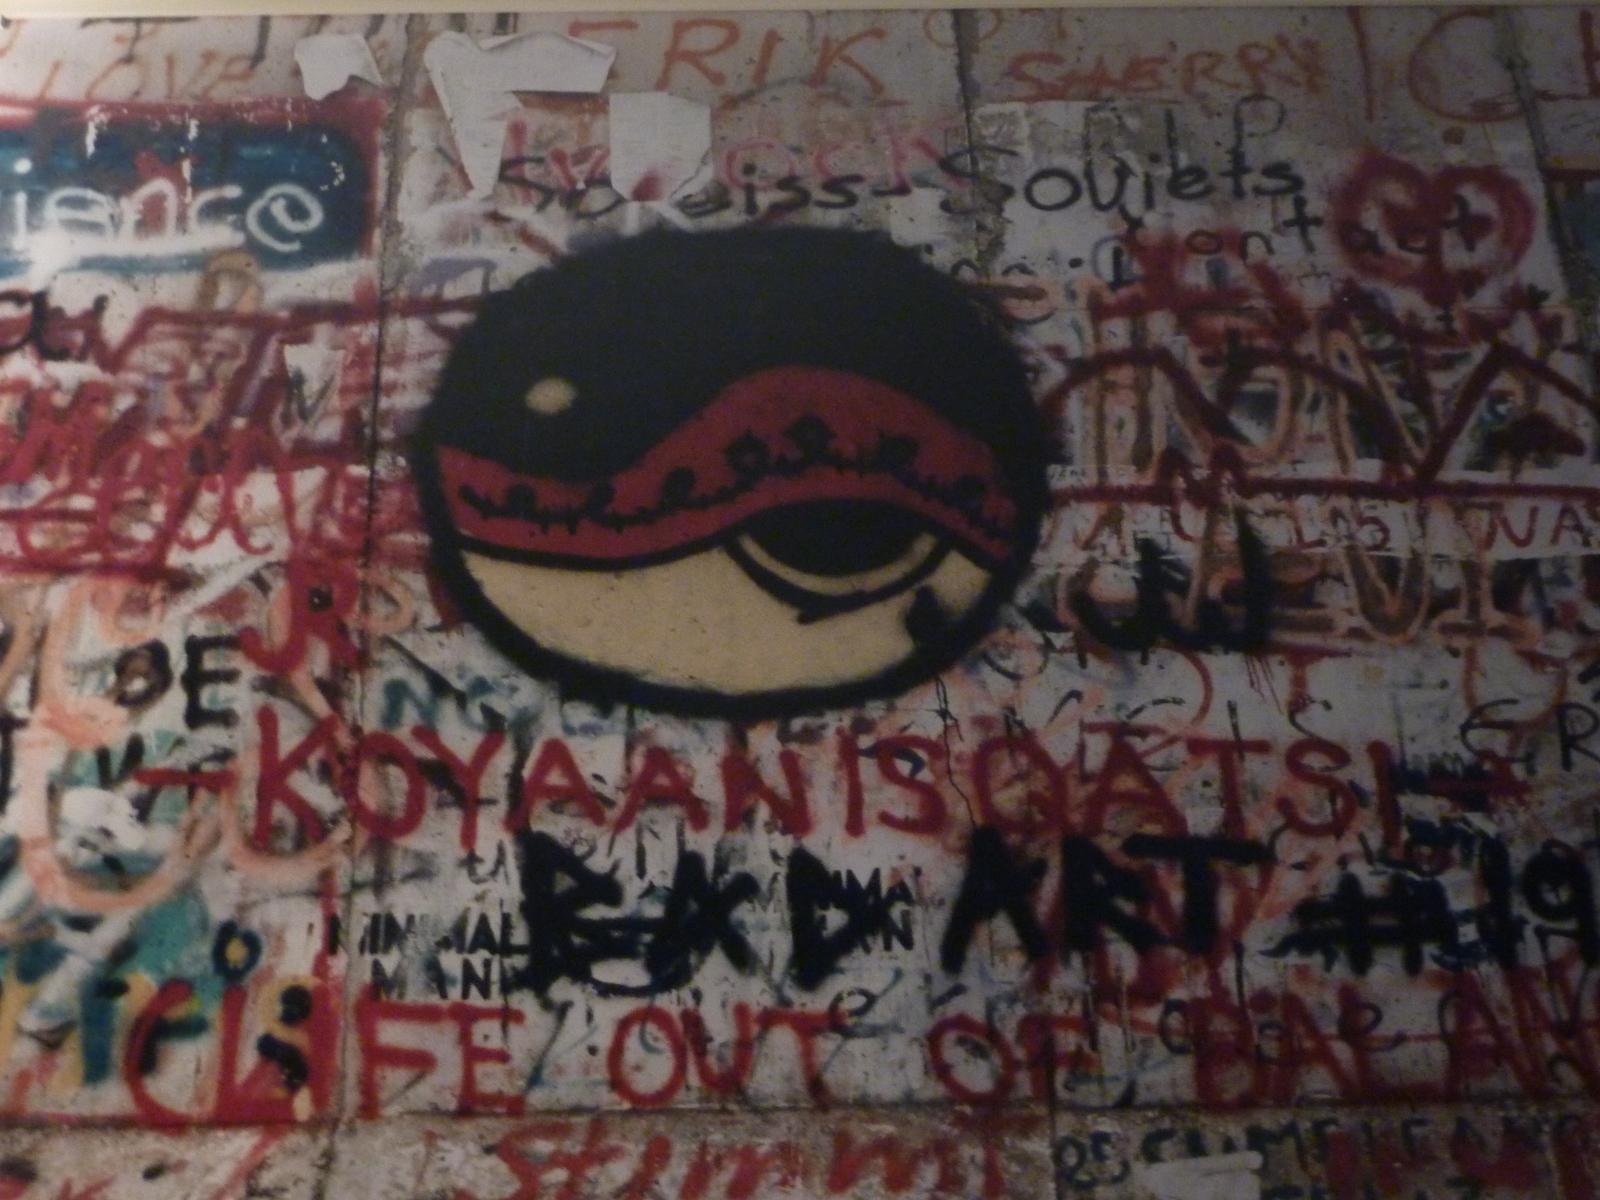 Berlin Wall Art